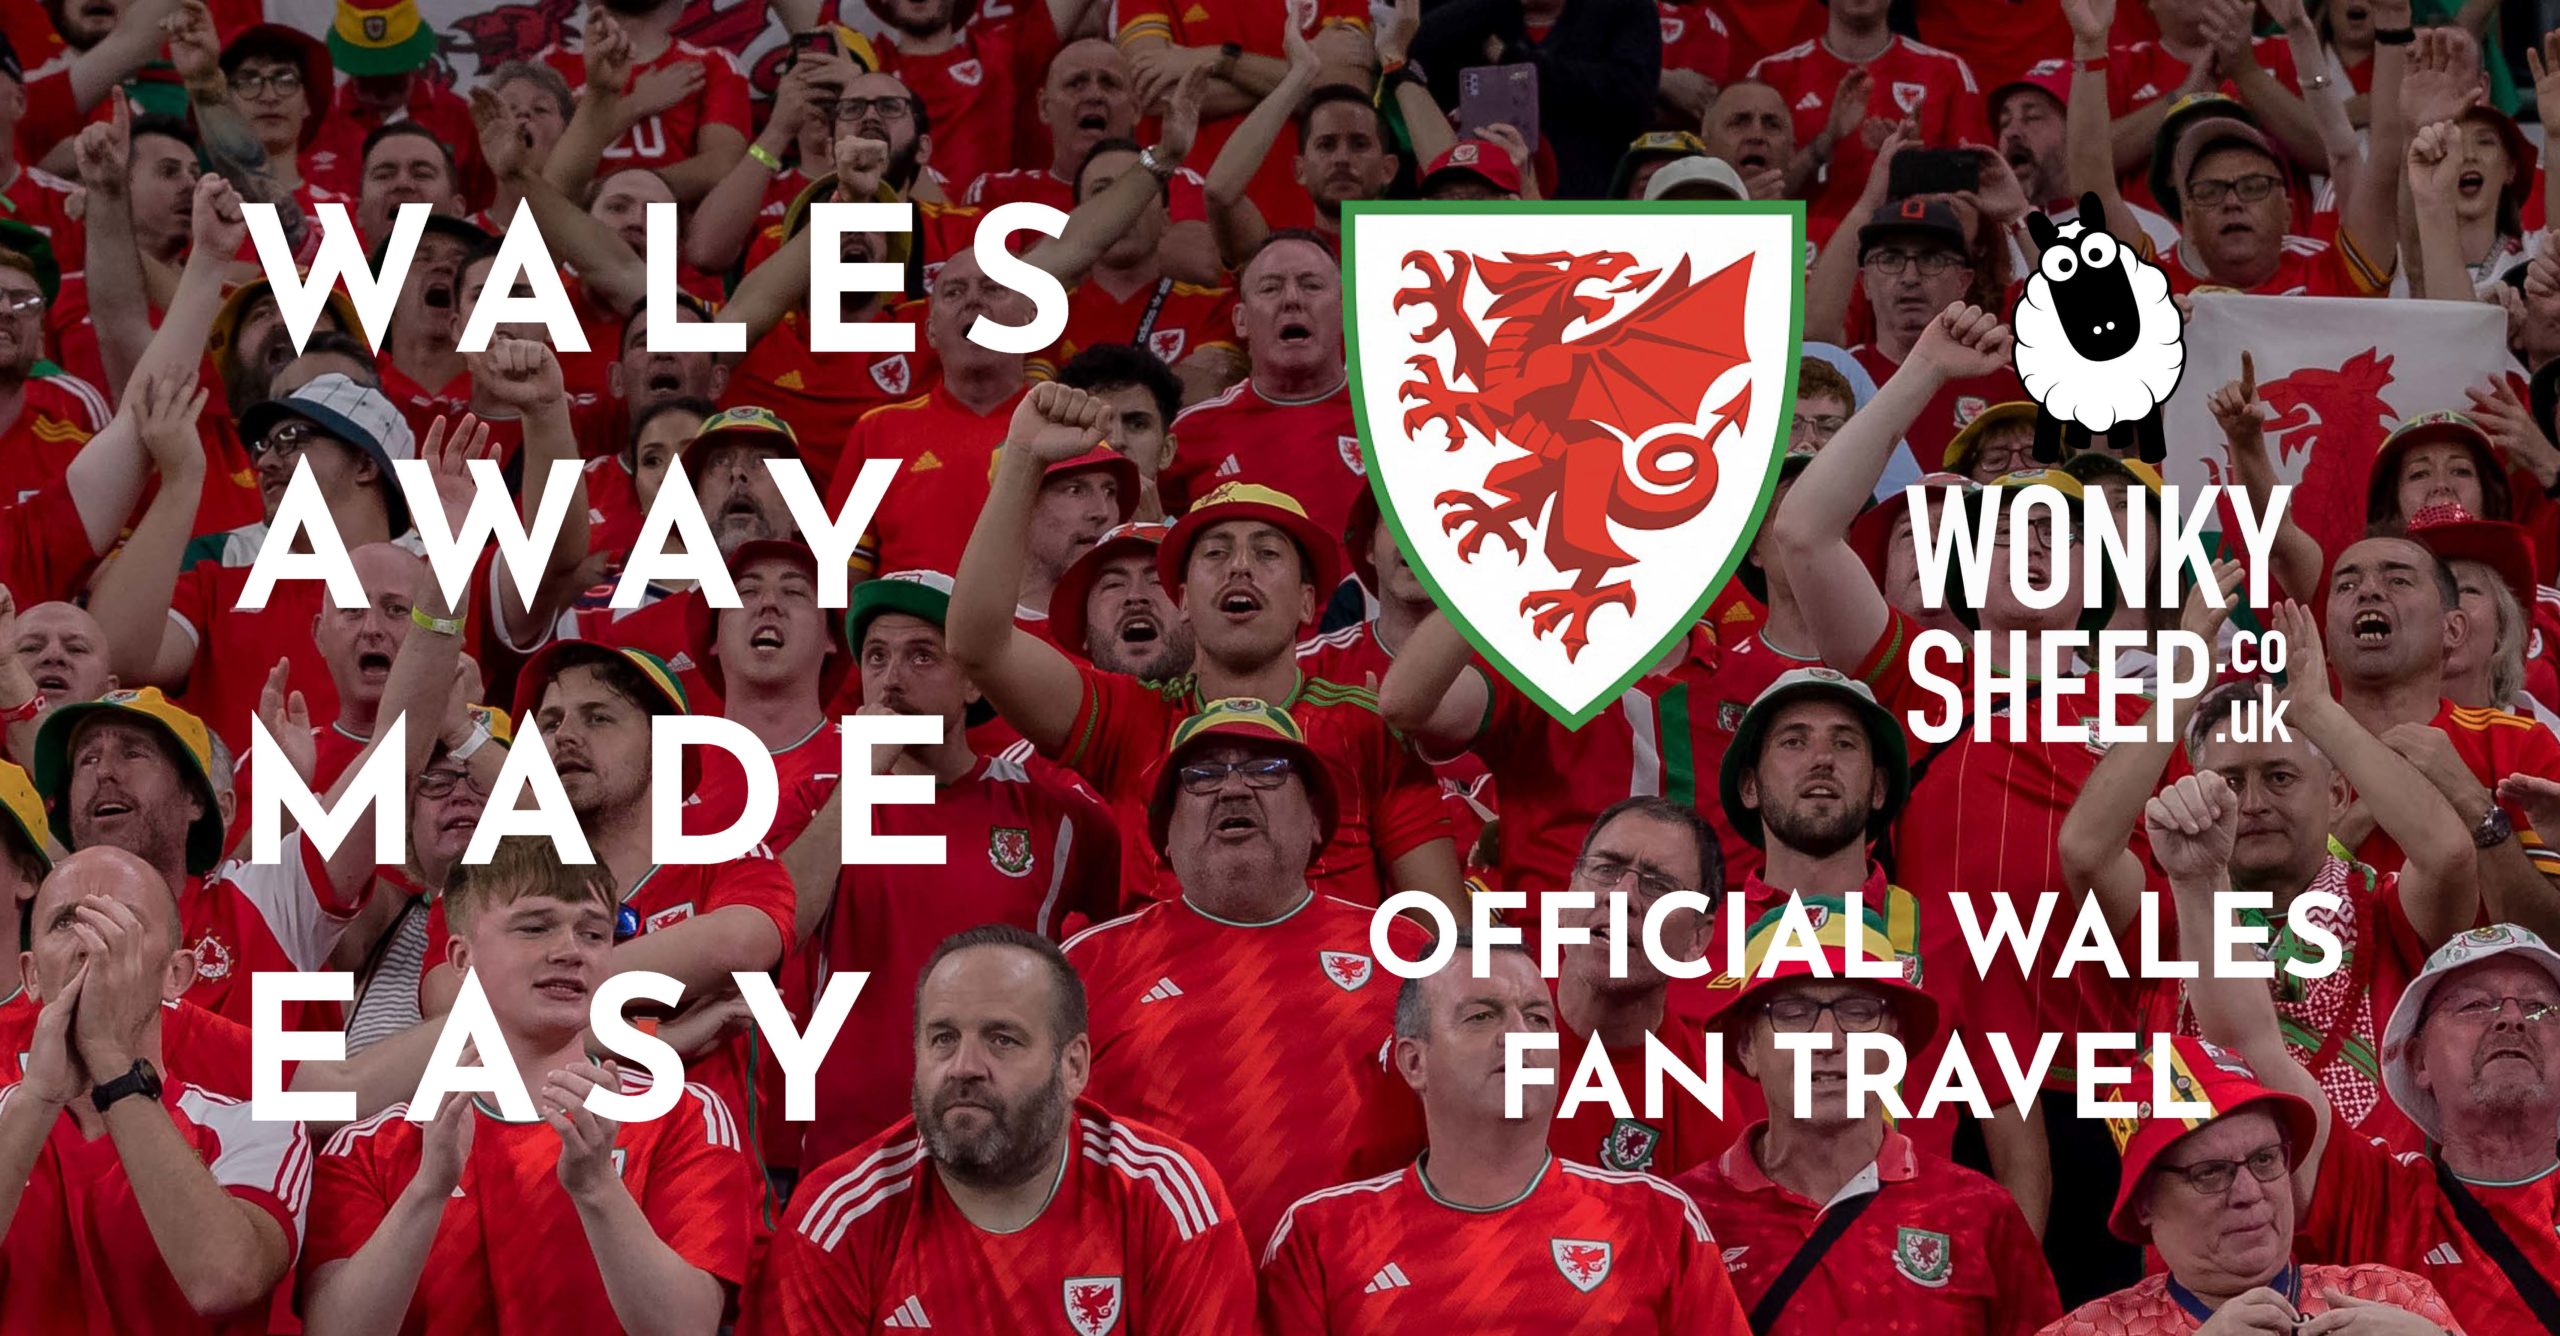 Wales Away Made Easy logo